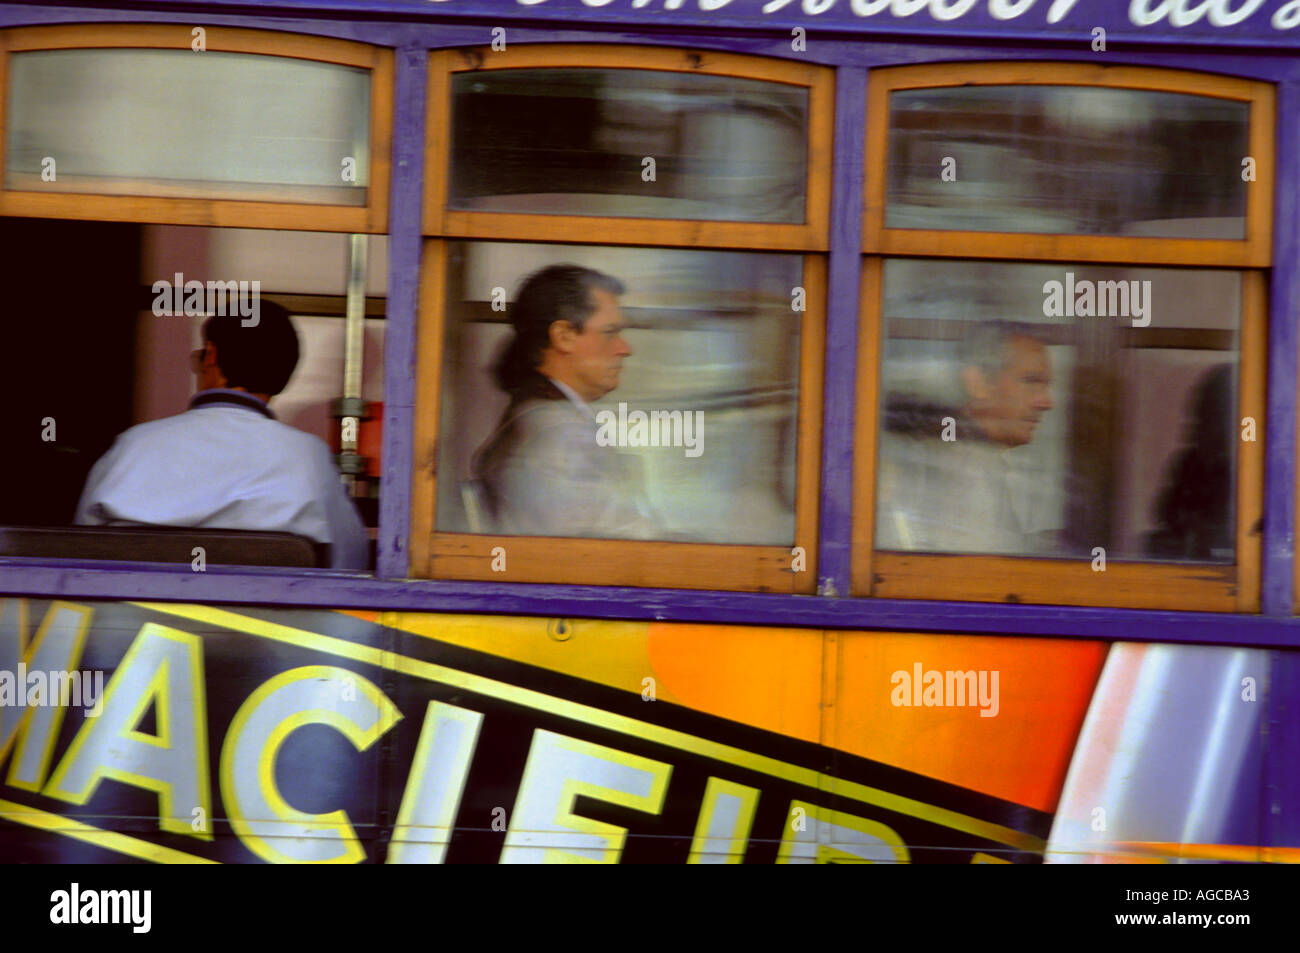 Europe Portugal Lisbon Trolley blured motion passengers Stock Photo